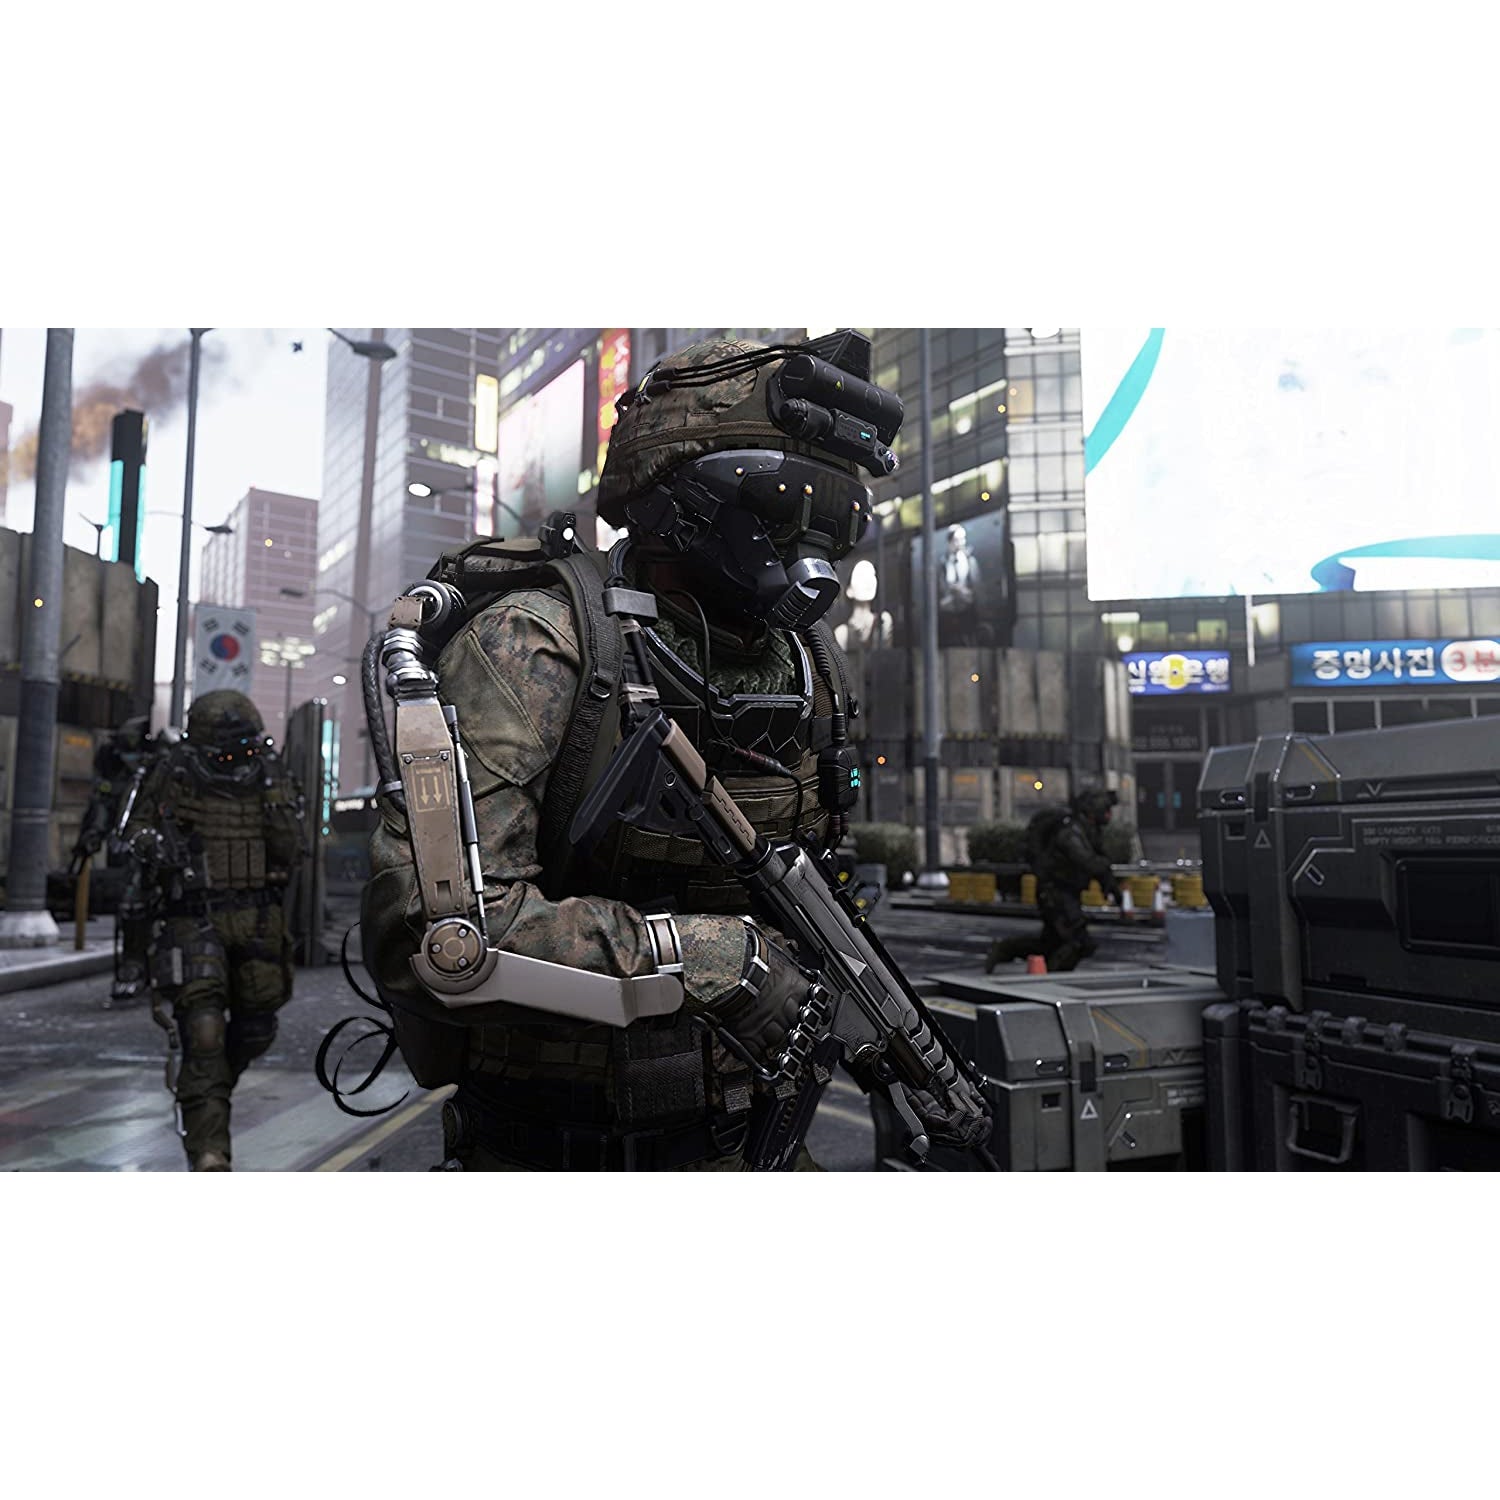 Call of Duty: Advanced Warfare (Xbox One)